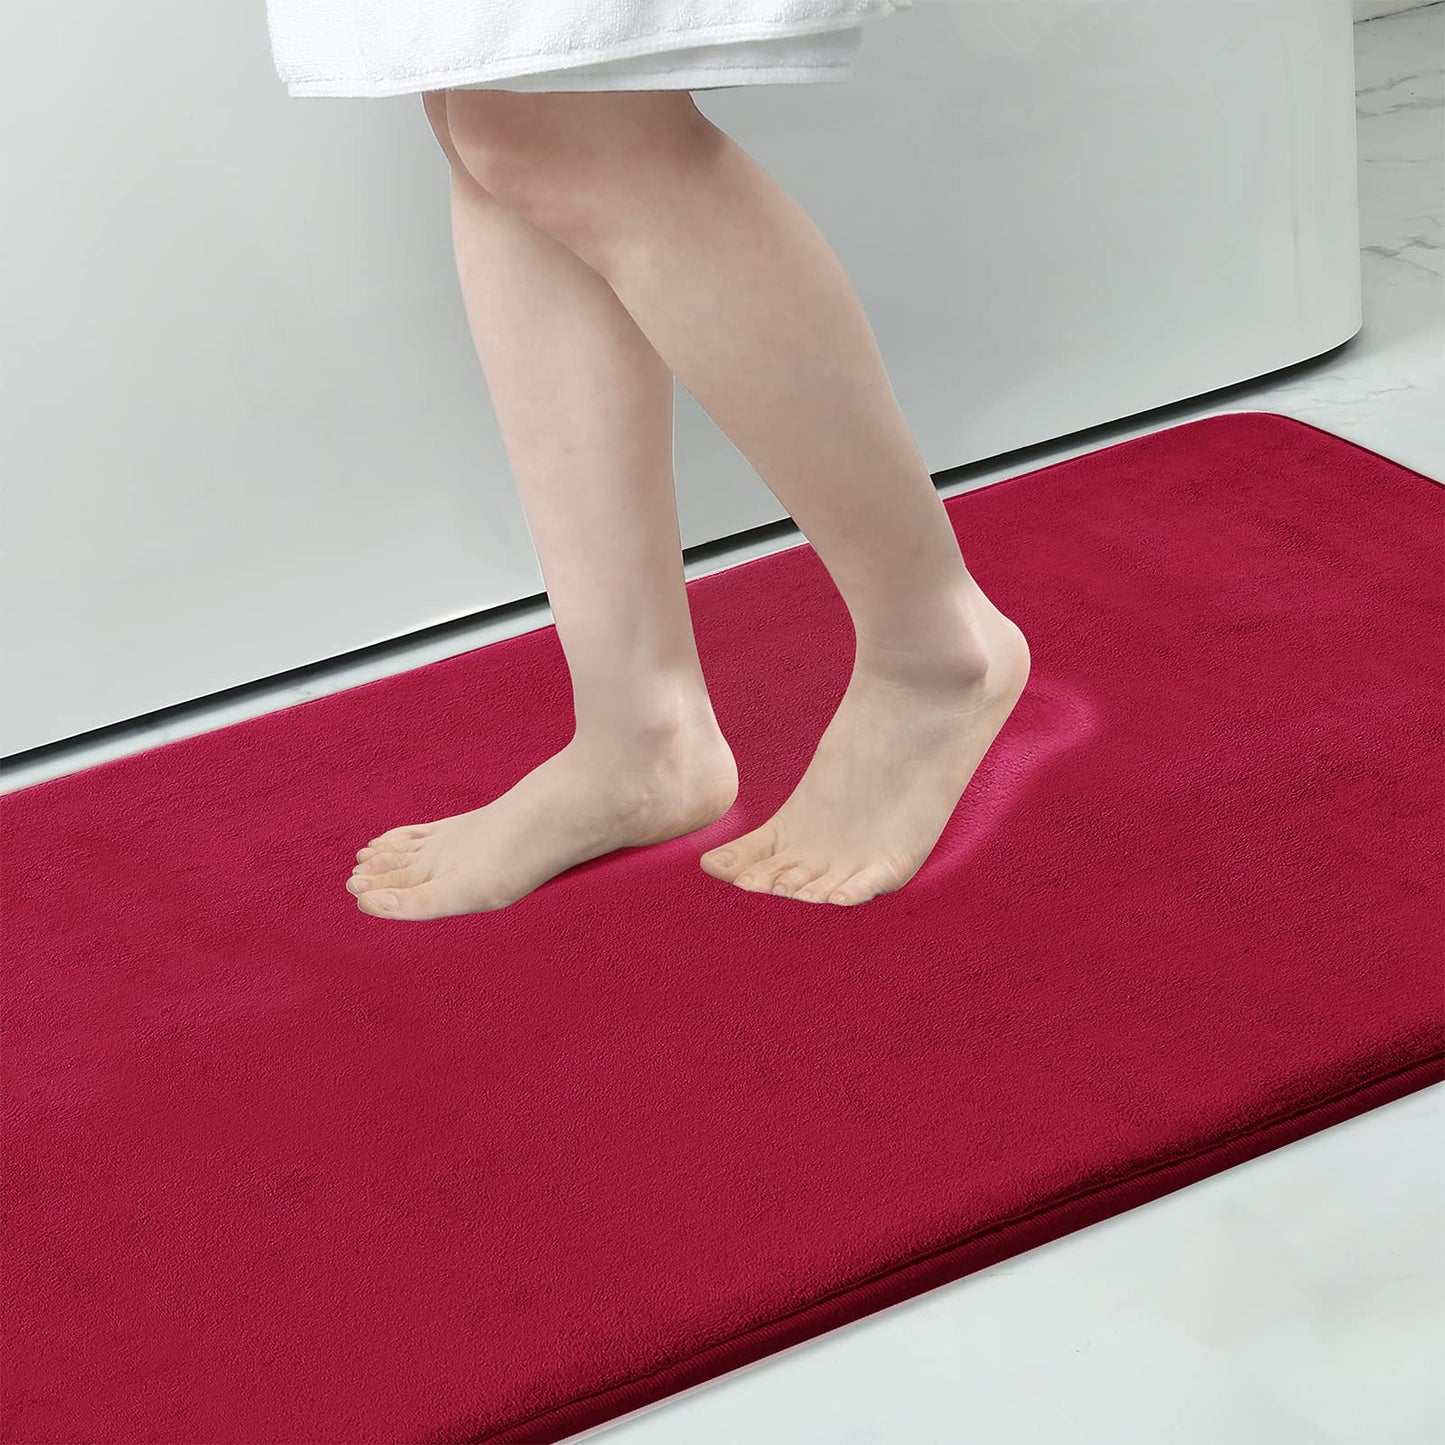 Memory Foam Bath Mat Anti-Slip Shower Carpet Soft Foot Pad Decoration Floor Protector Absorbent Quick Dry Bathroom Rug Mats & Rugs DailyAlertDeals 43x61cm(17x24inch) China wine red